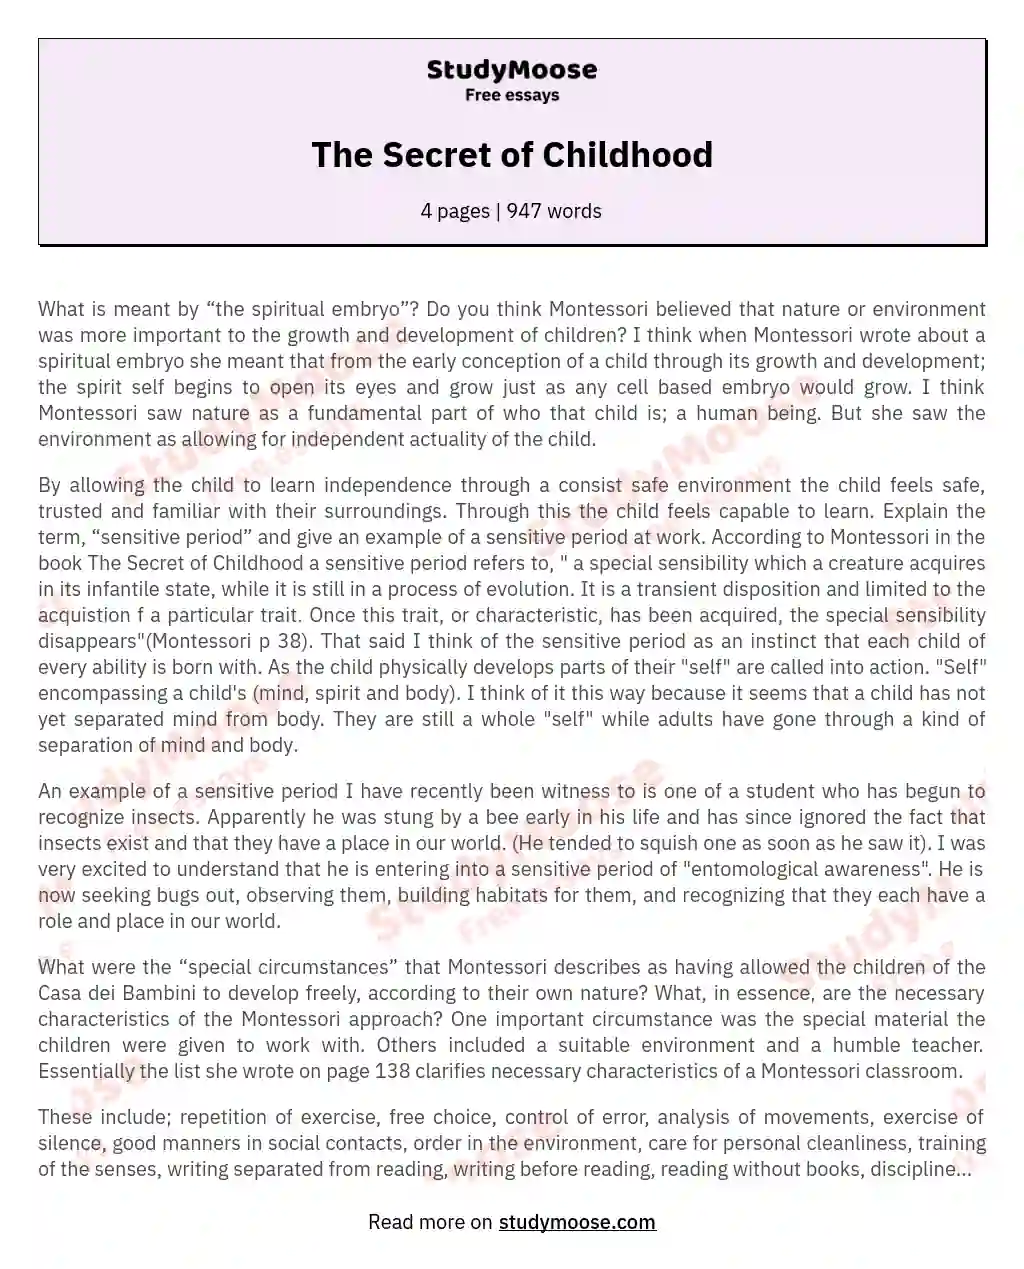 The Secret of Childhood essay